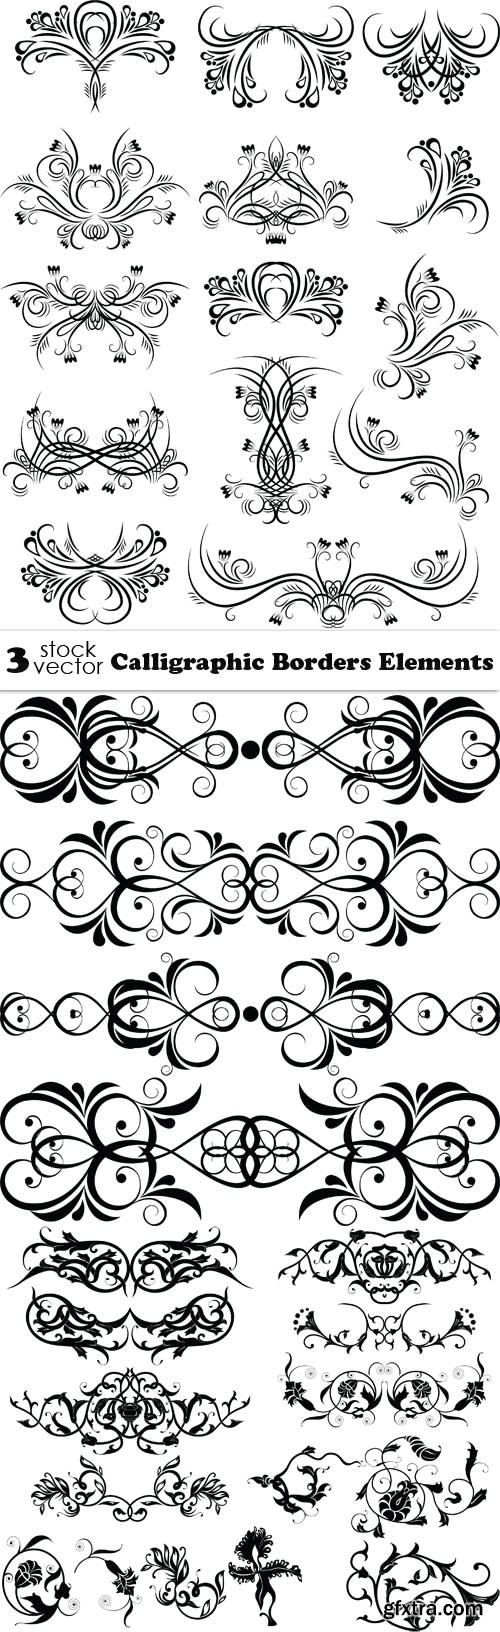 Vectors - Calligraphic Borders Elements